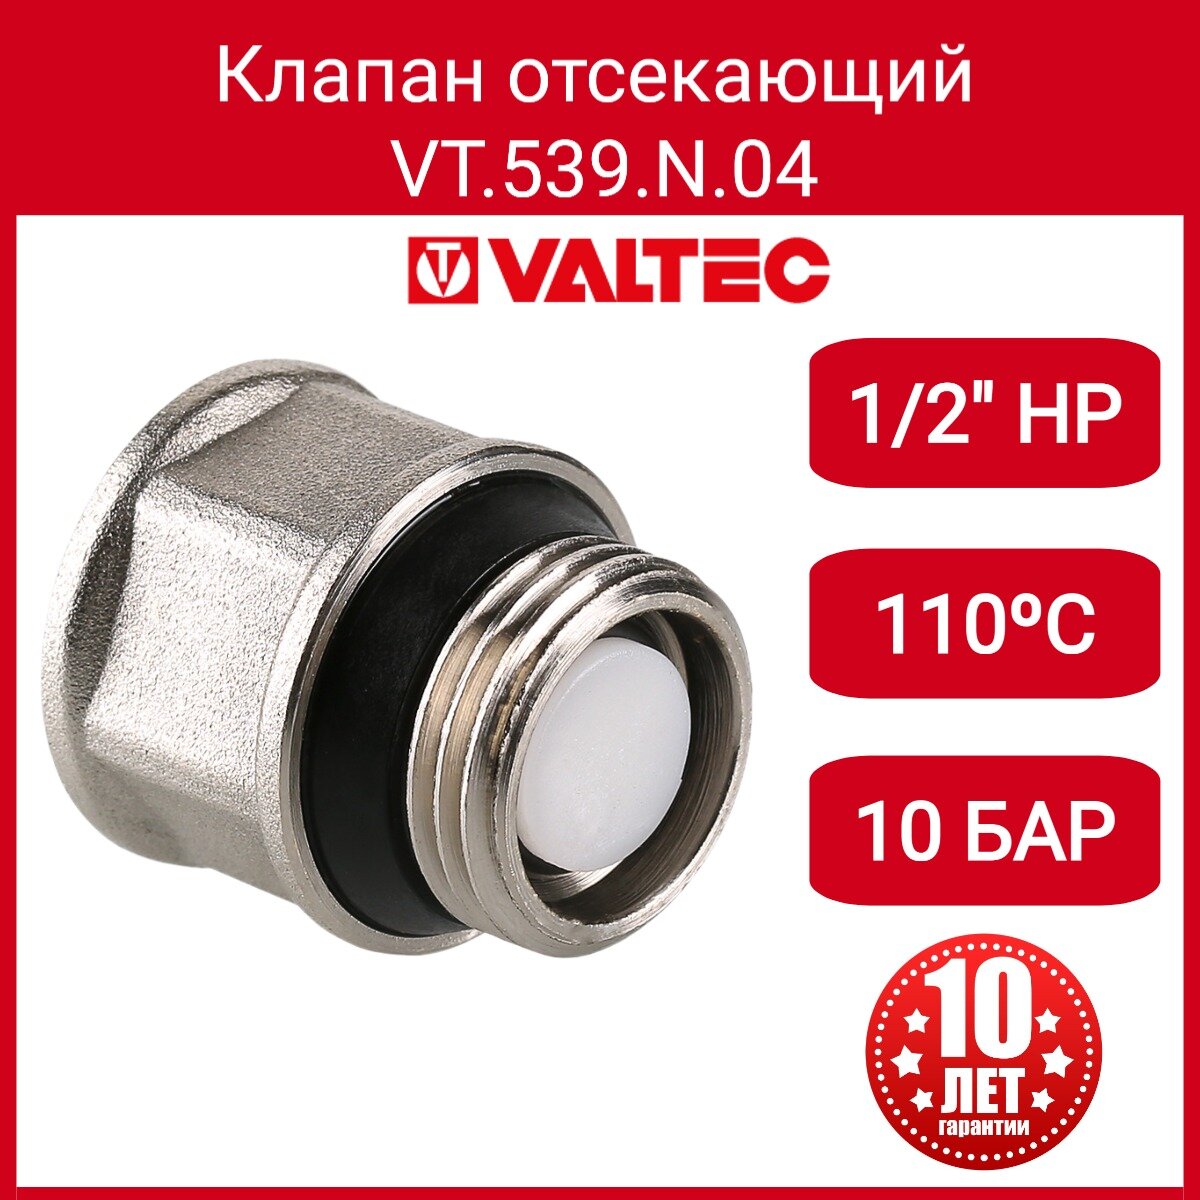 Клапан отсекающий 1/2" VALTEC VT.539. N.04